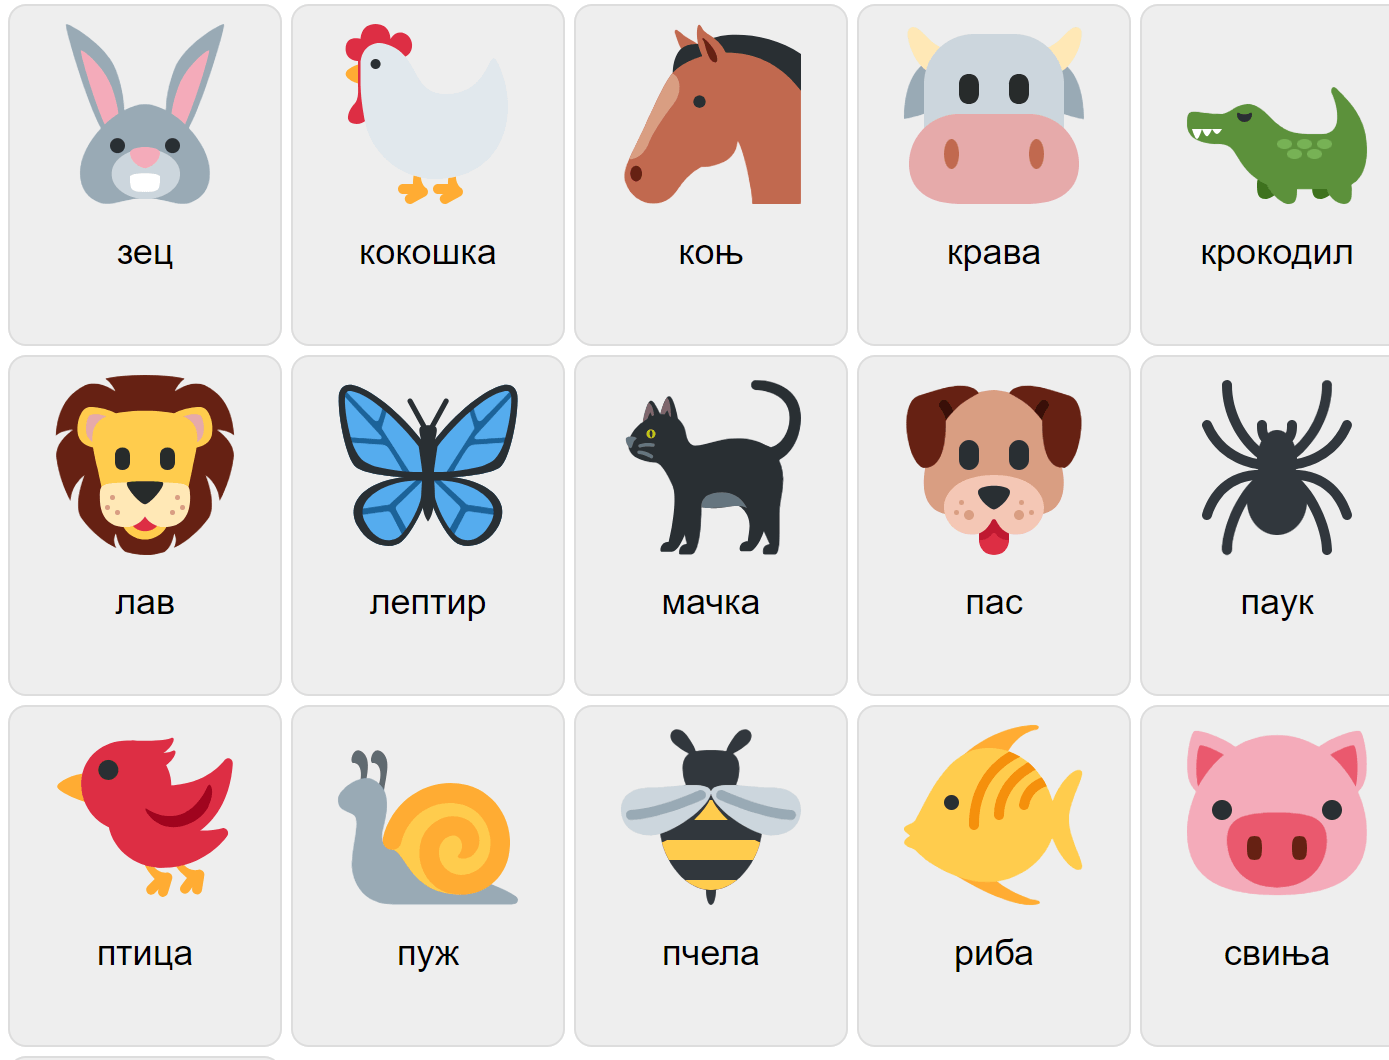 Animals in Serbian